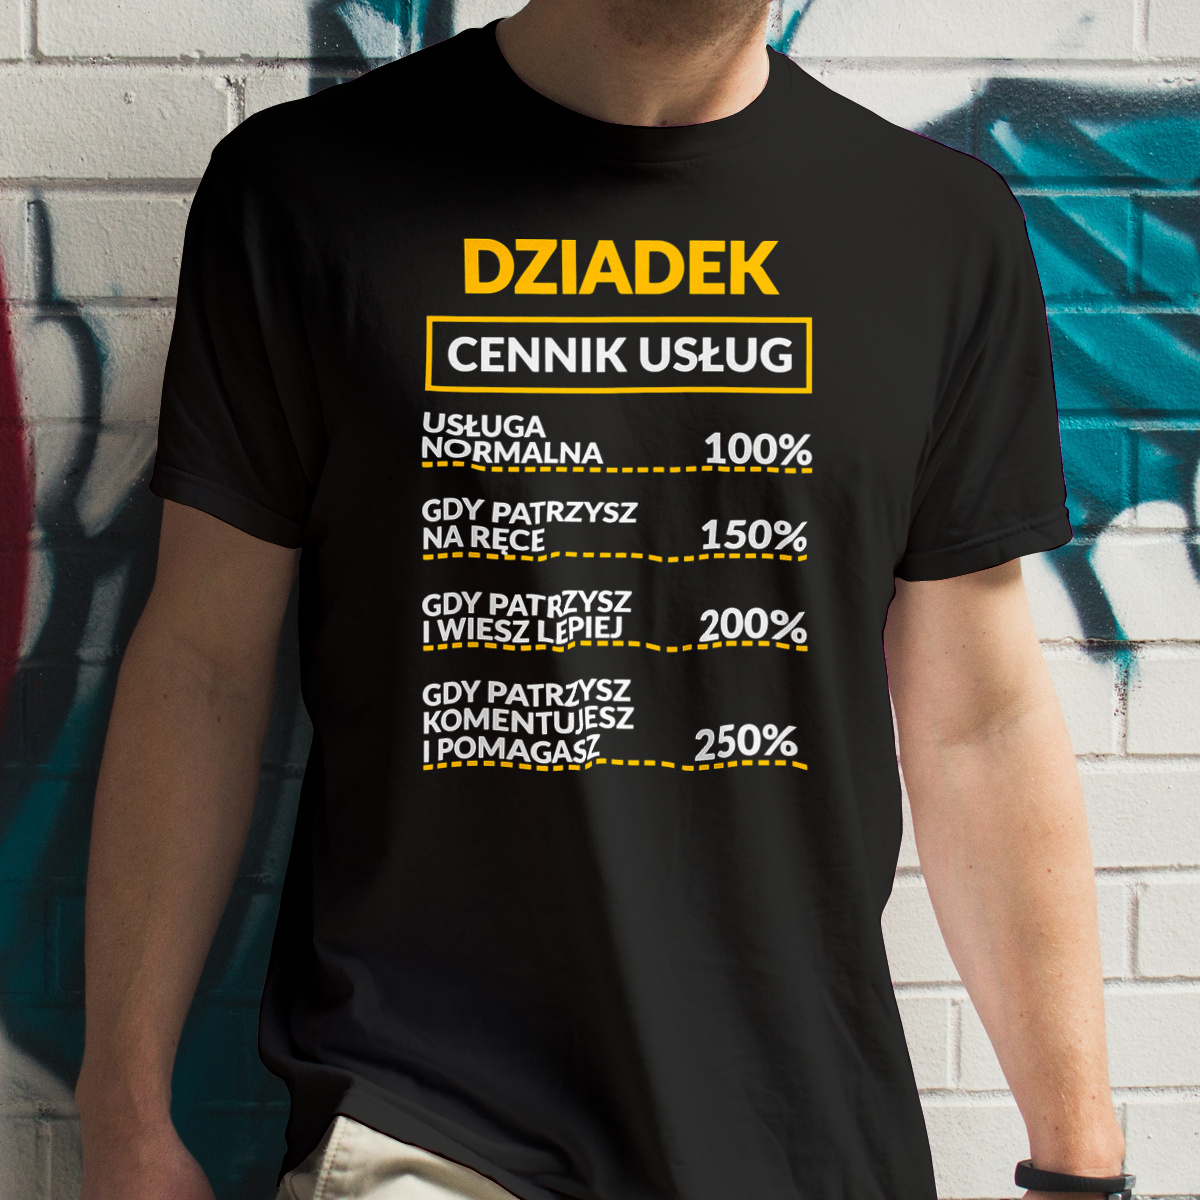 Dziadek - Cennik Usług - Męska Koszulka Czarna